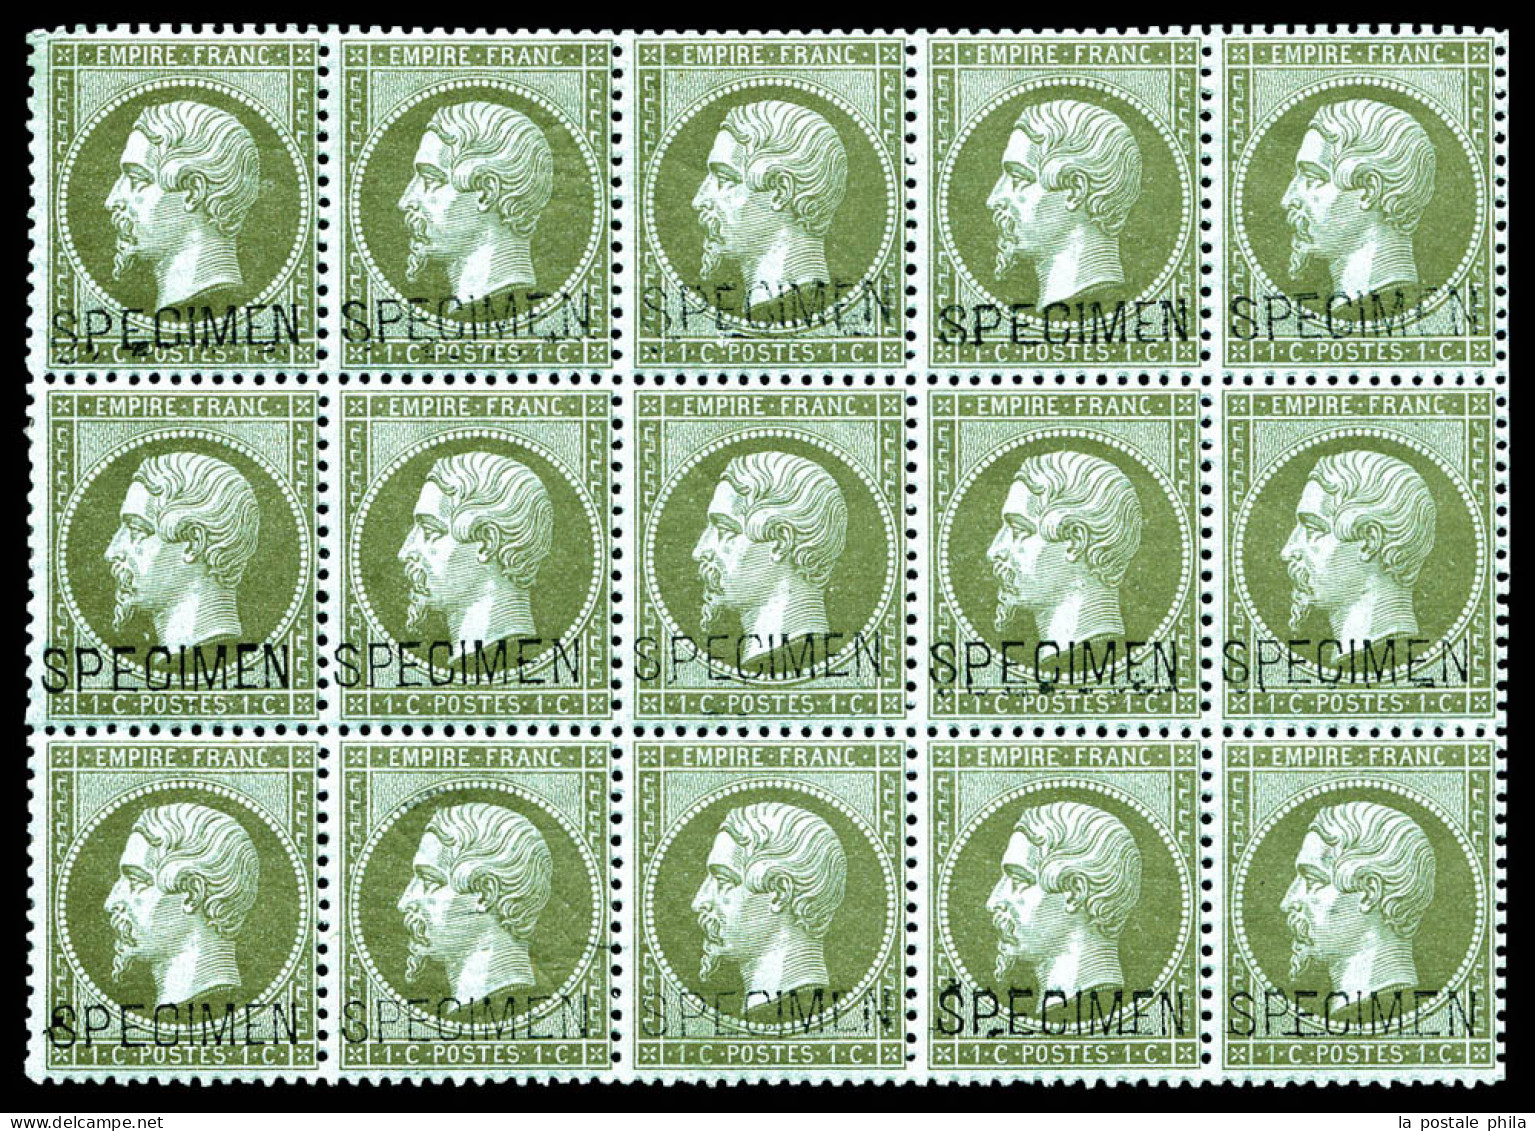 ** N°19f, 1c Vert-olive Surchargé 'SPECIMEN' En Bloc De 15 Exemplaires (3ex*), Fraîcheur Postale. SUPERBE. R.R. (certifi - 1862 Napoleon III